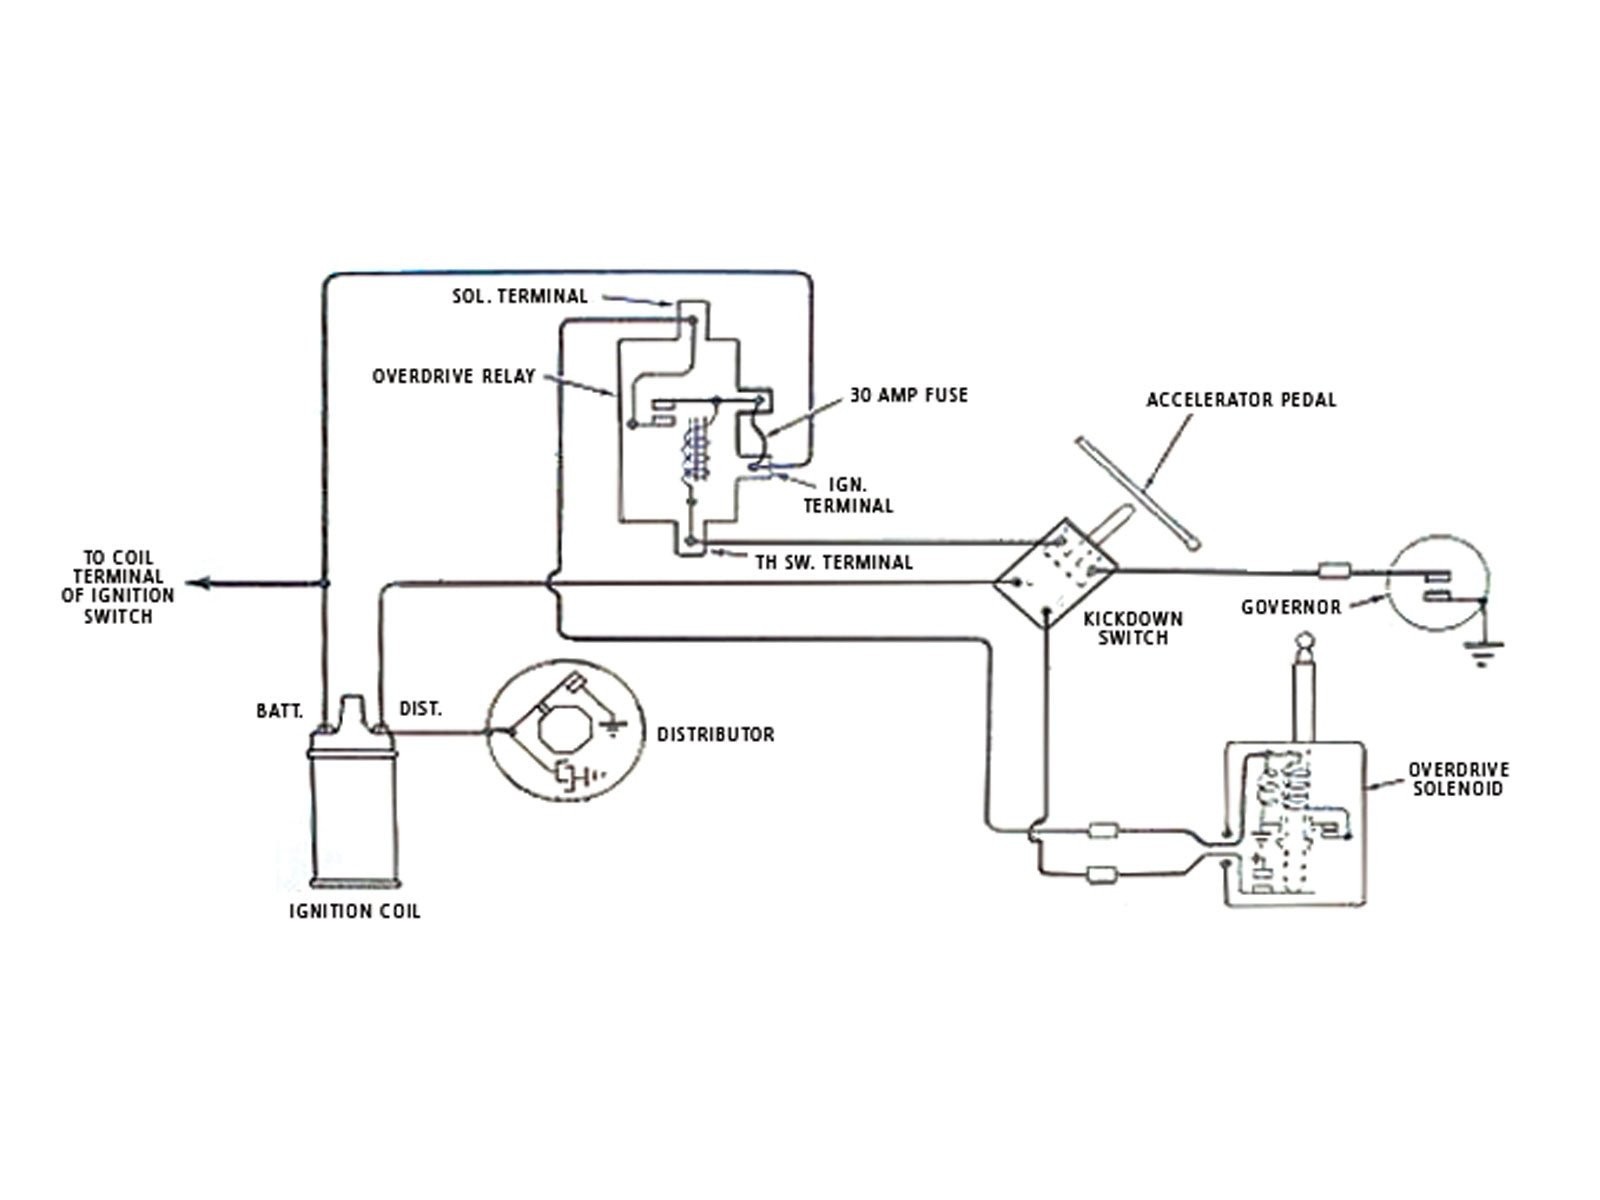 Borg Warner Overdrive Wiring Diagram Sample Electrical Wiring Diagram Borg warner overdrive wiring diagram